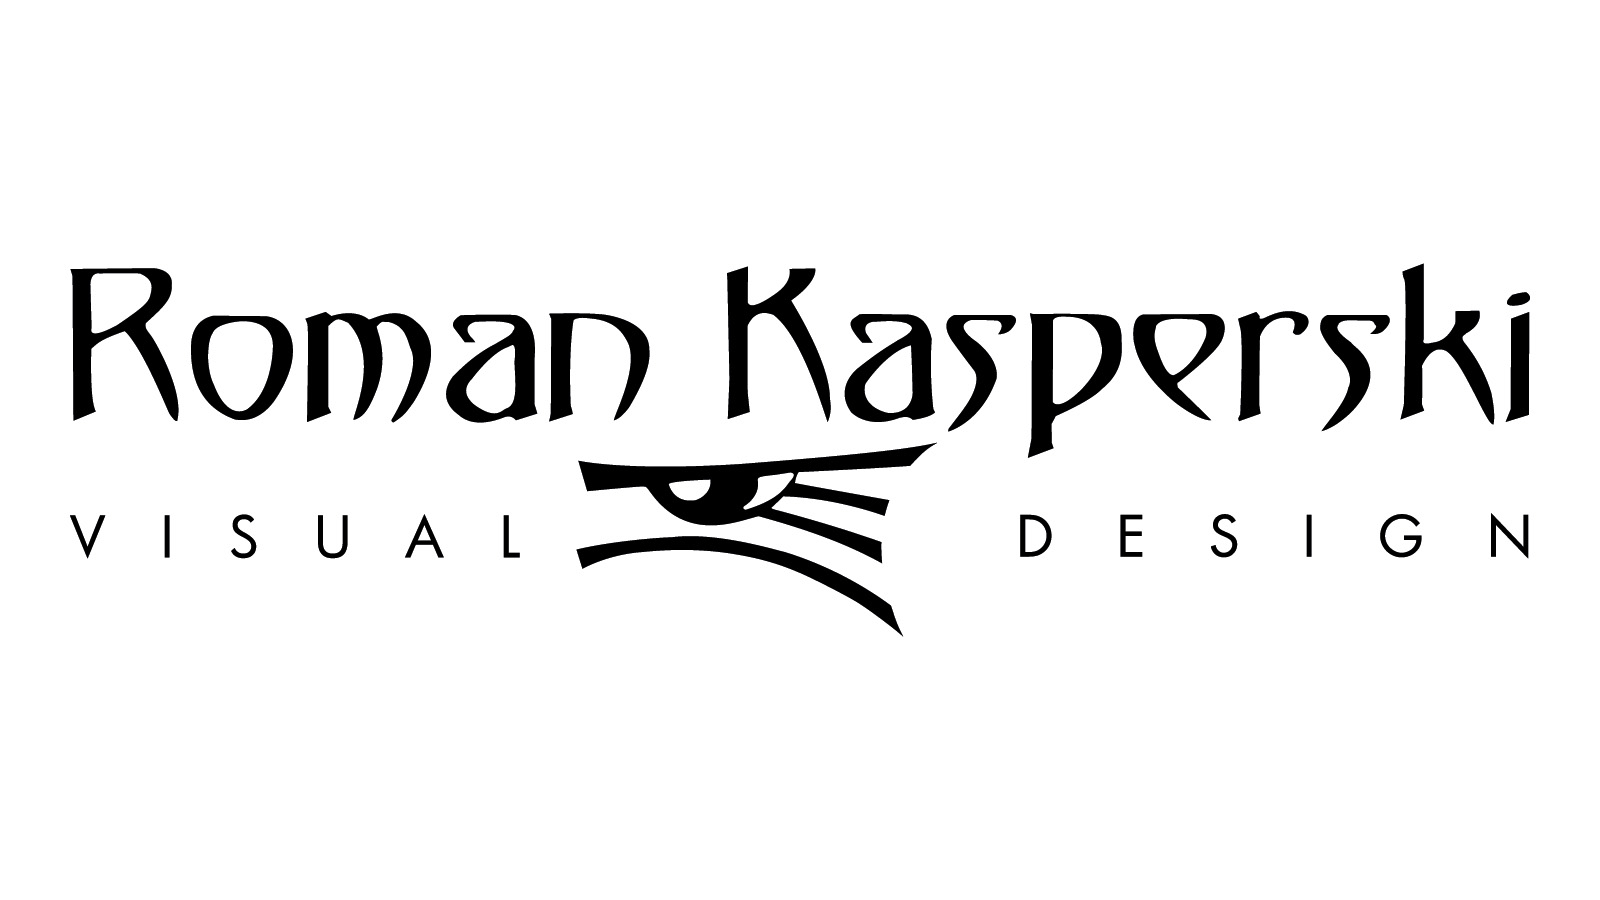 Roman Kasperski Visual Design